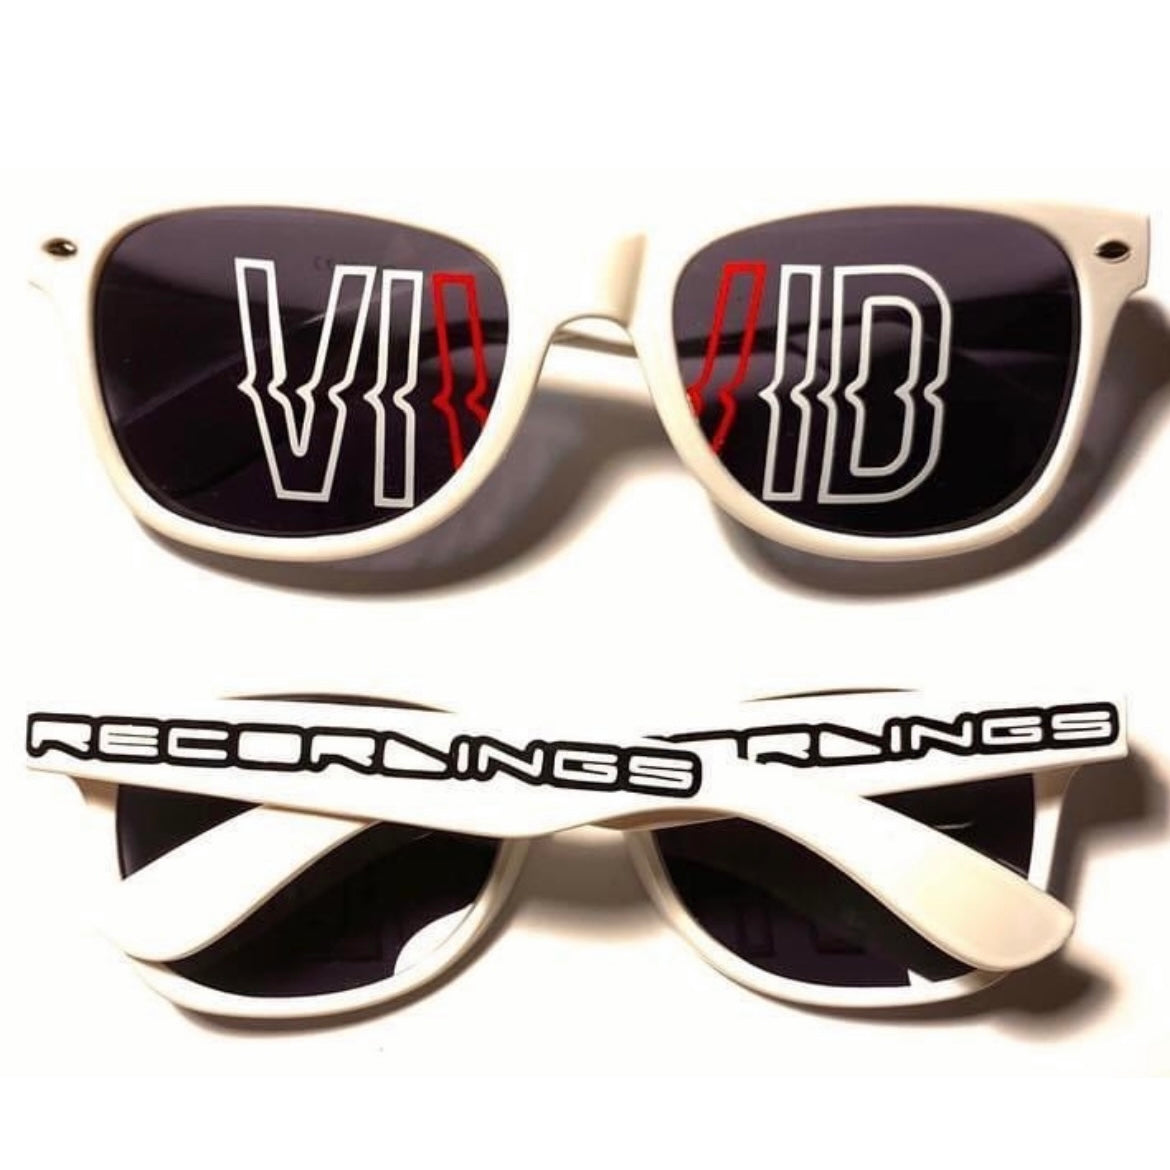 Vivid Recordings Sunglasses